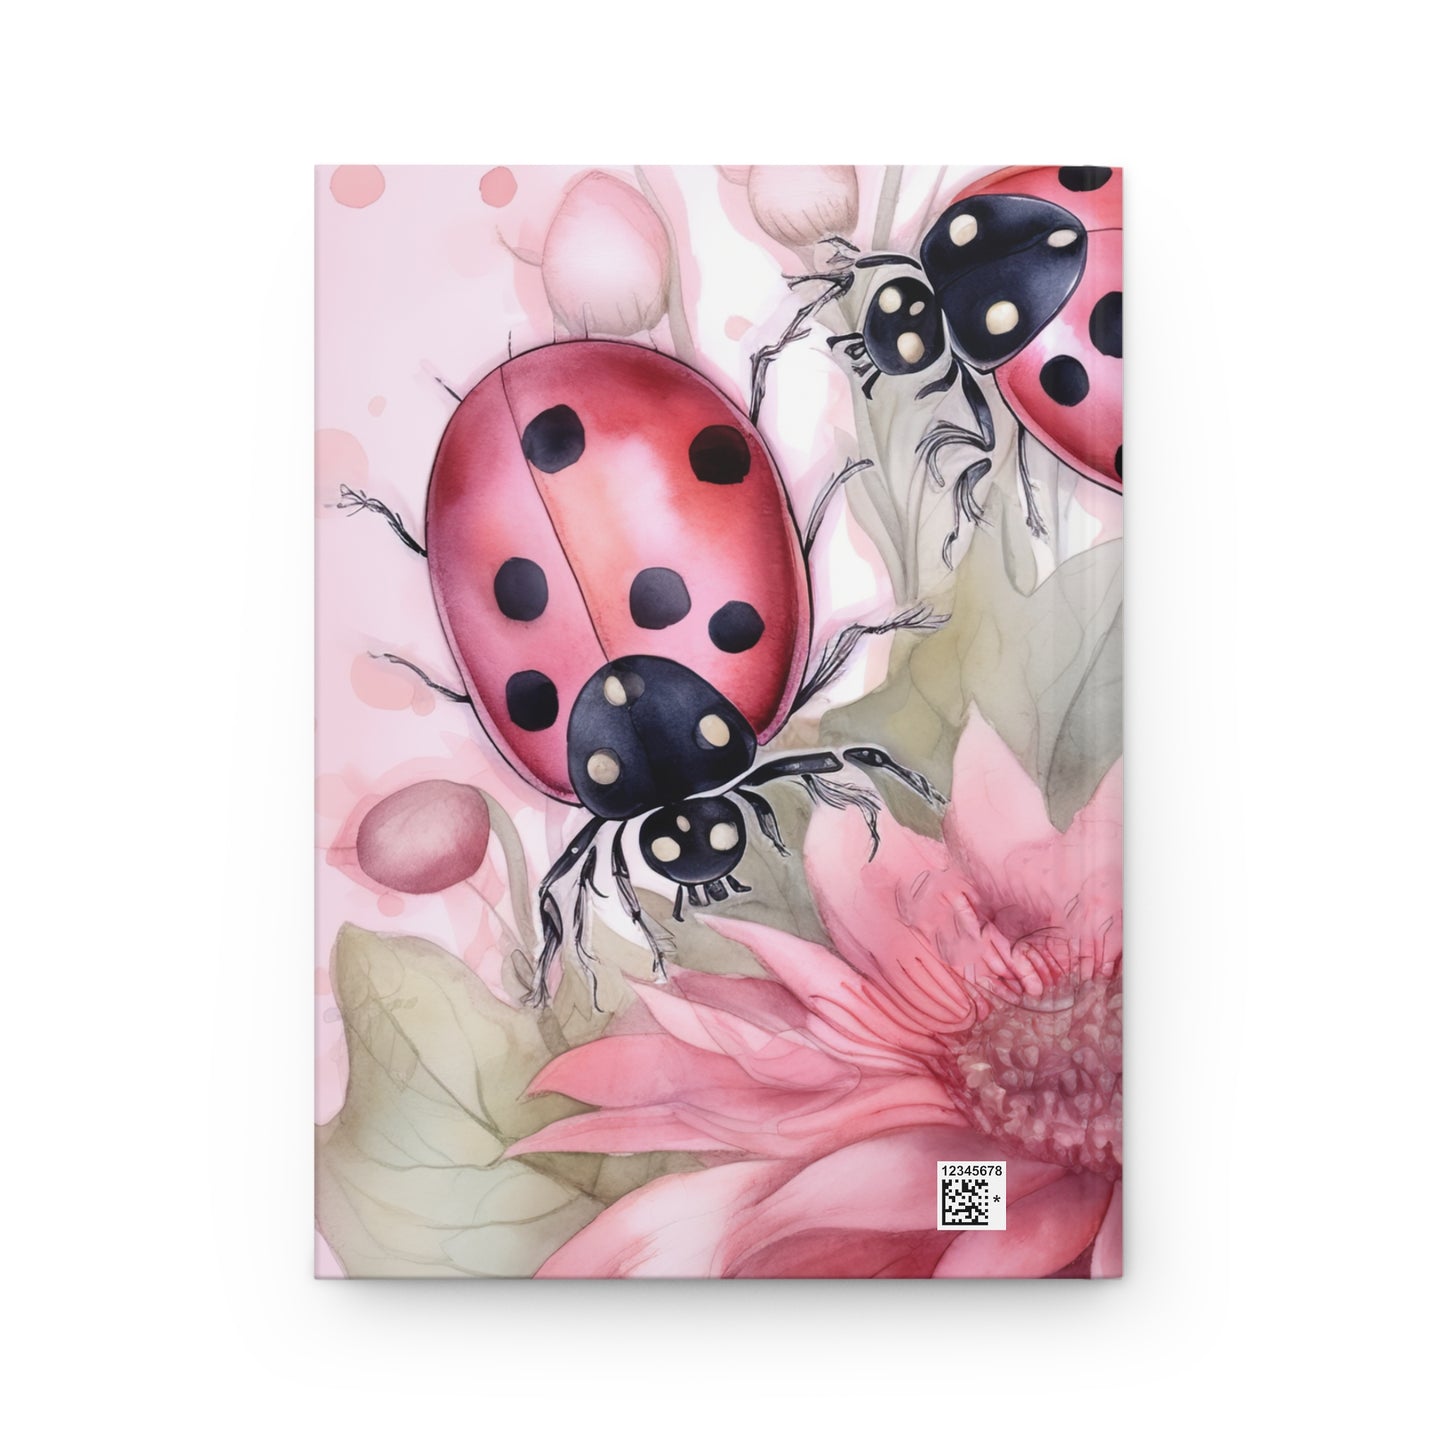 Ladybug Journal / Personalized Journal